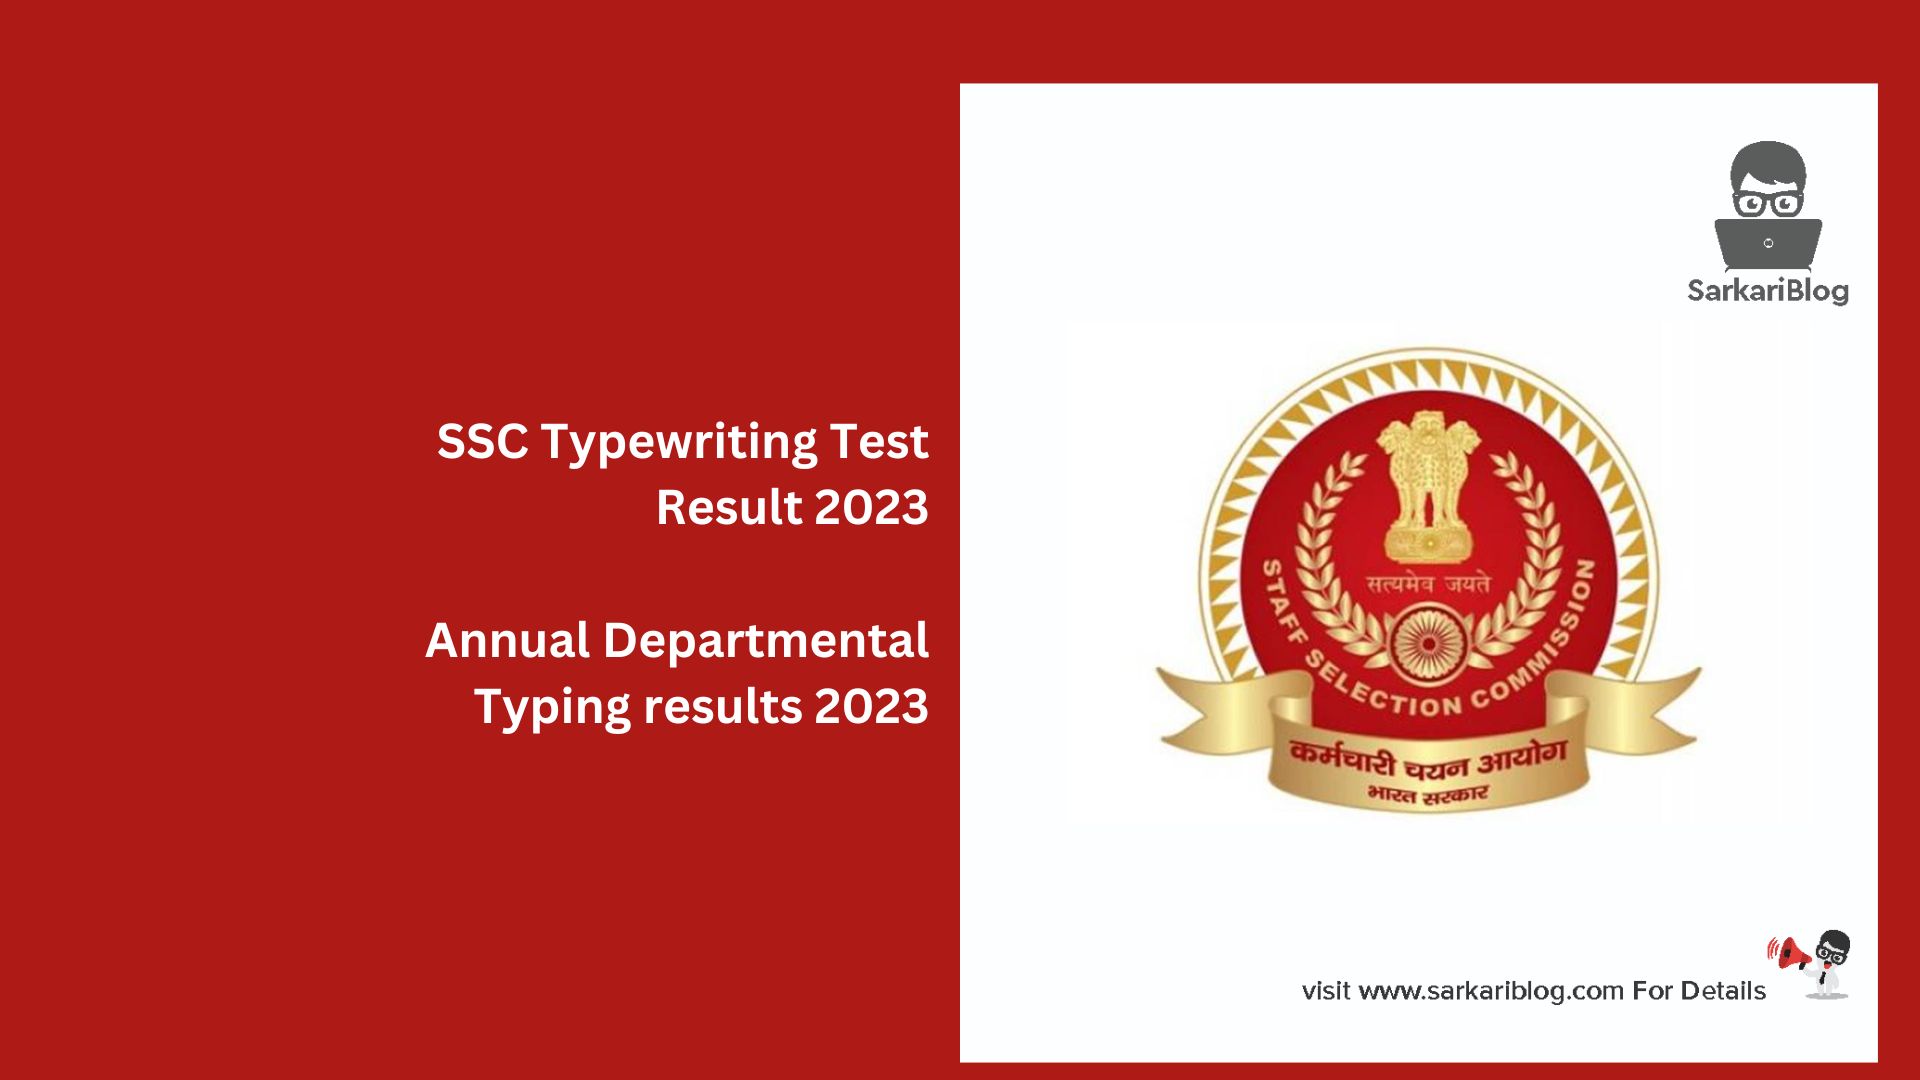 SSC Typewriting Test Result 2023